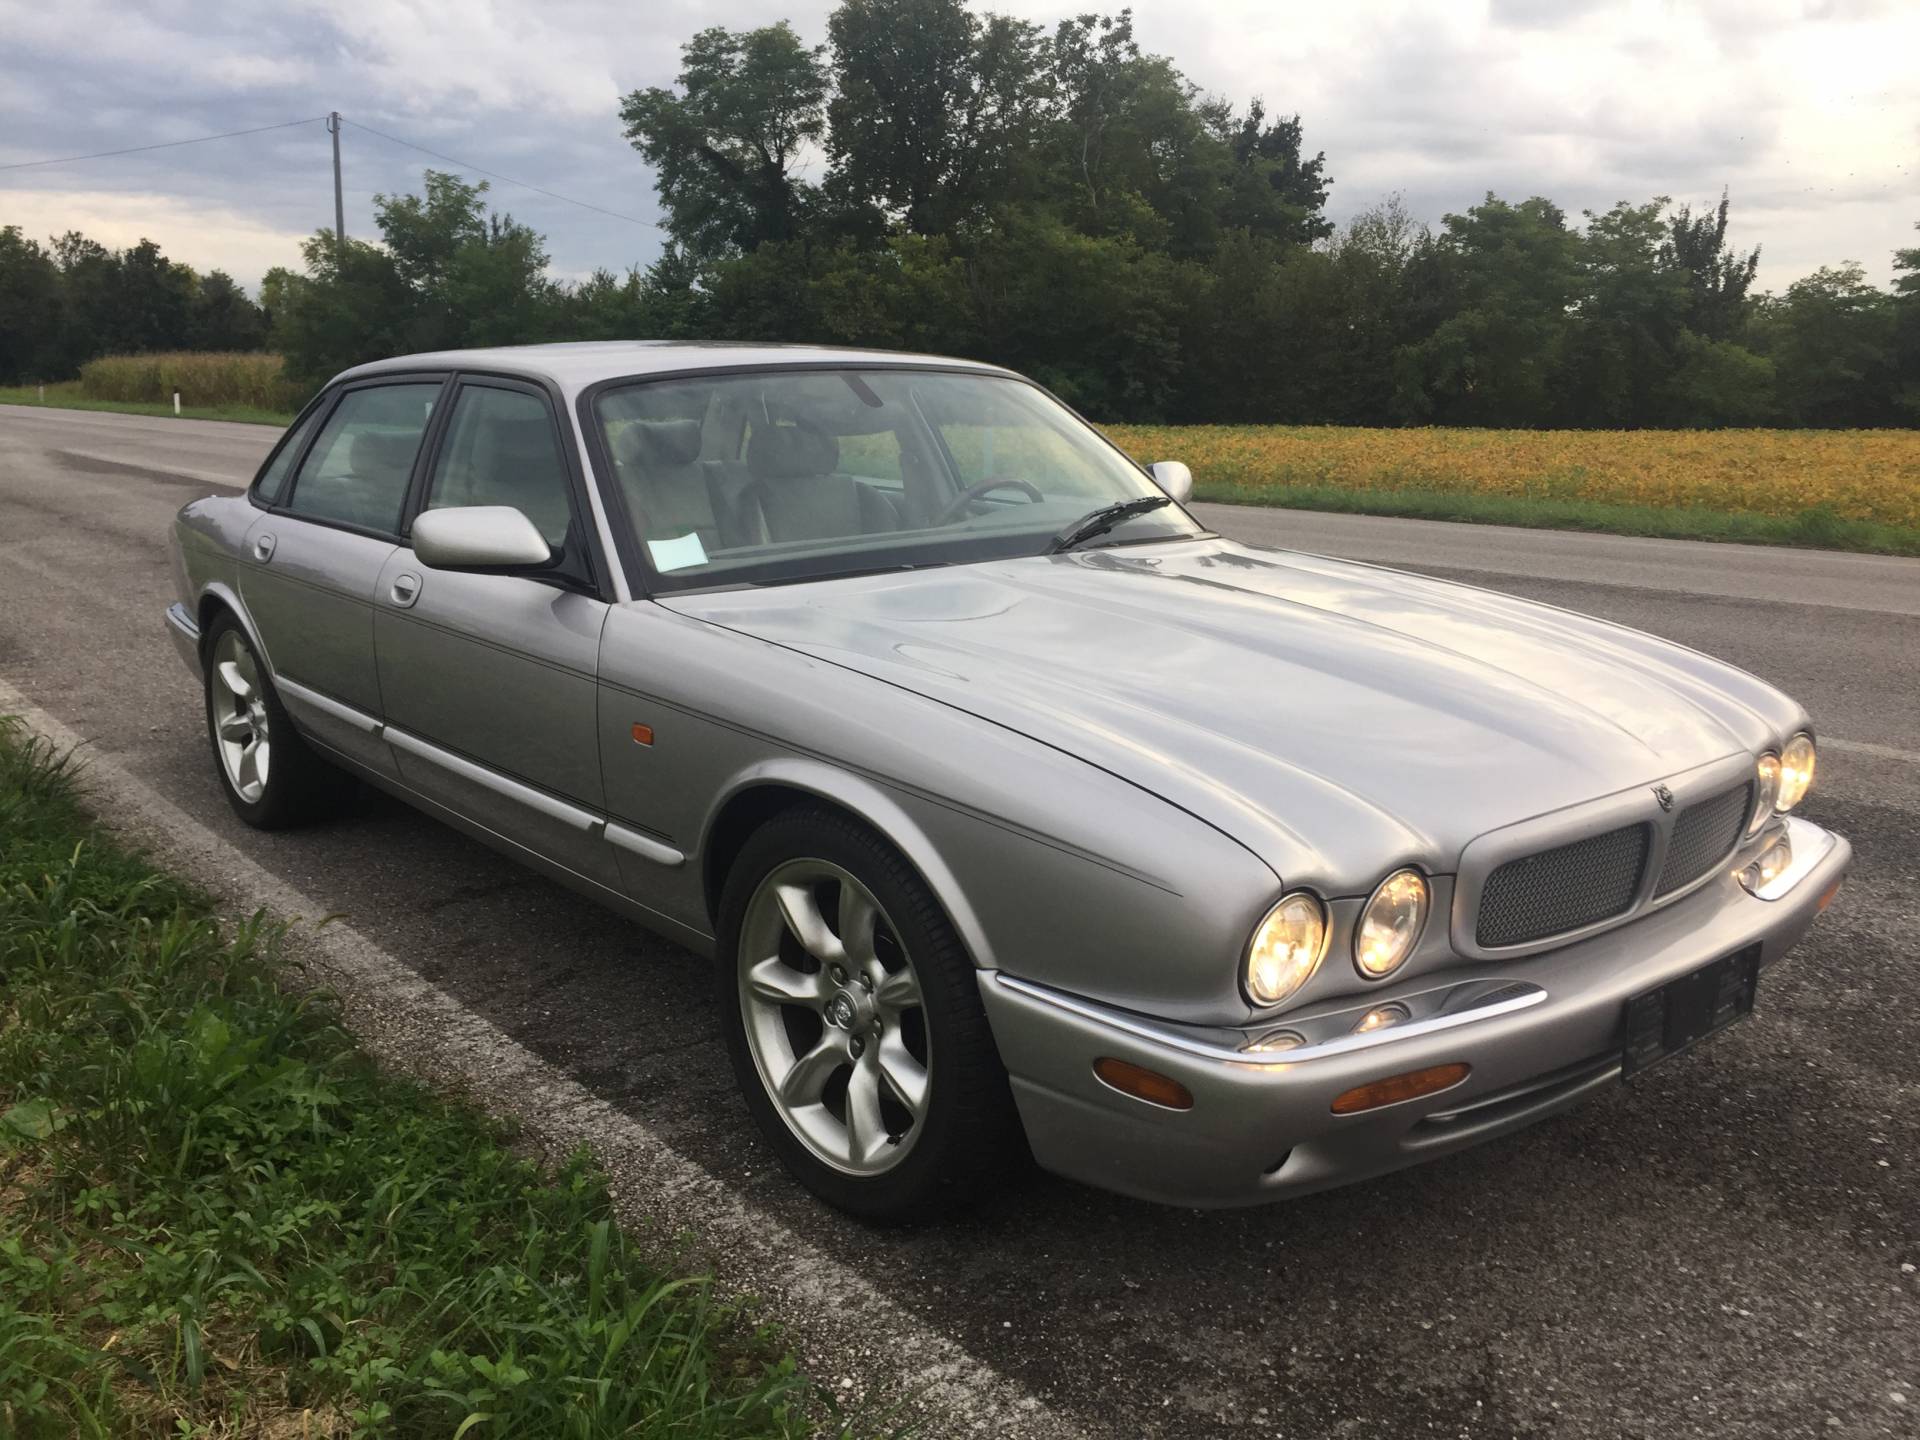 For Sale: Jaguar XJR 4.0 (2000) offered for AUD 18,007